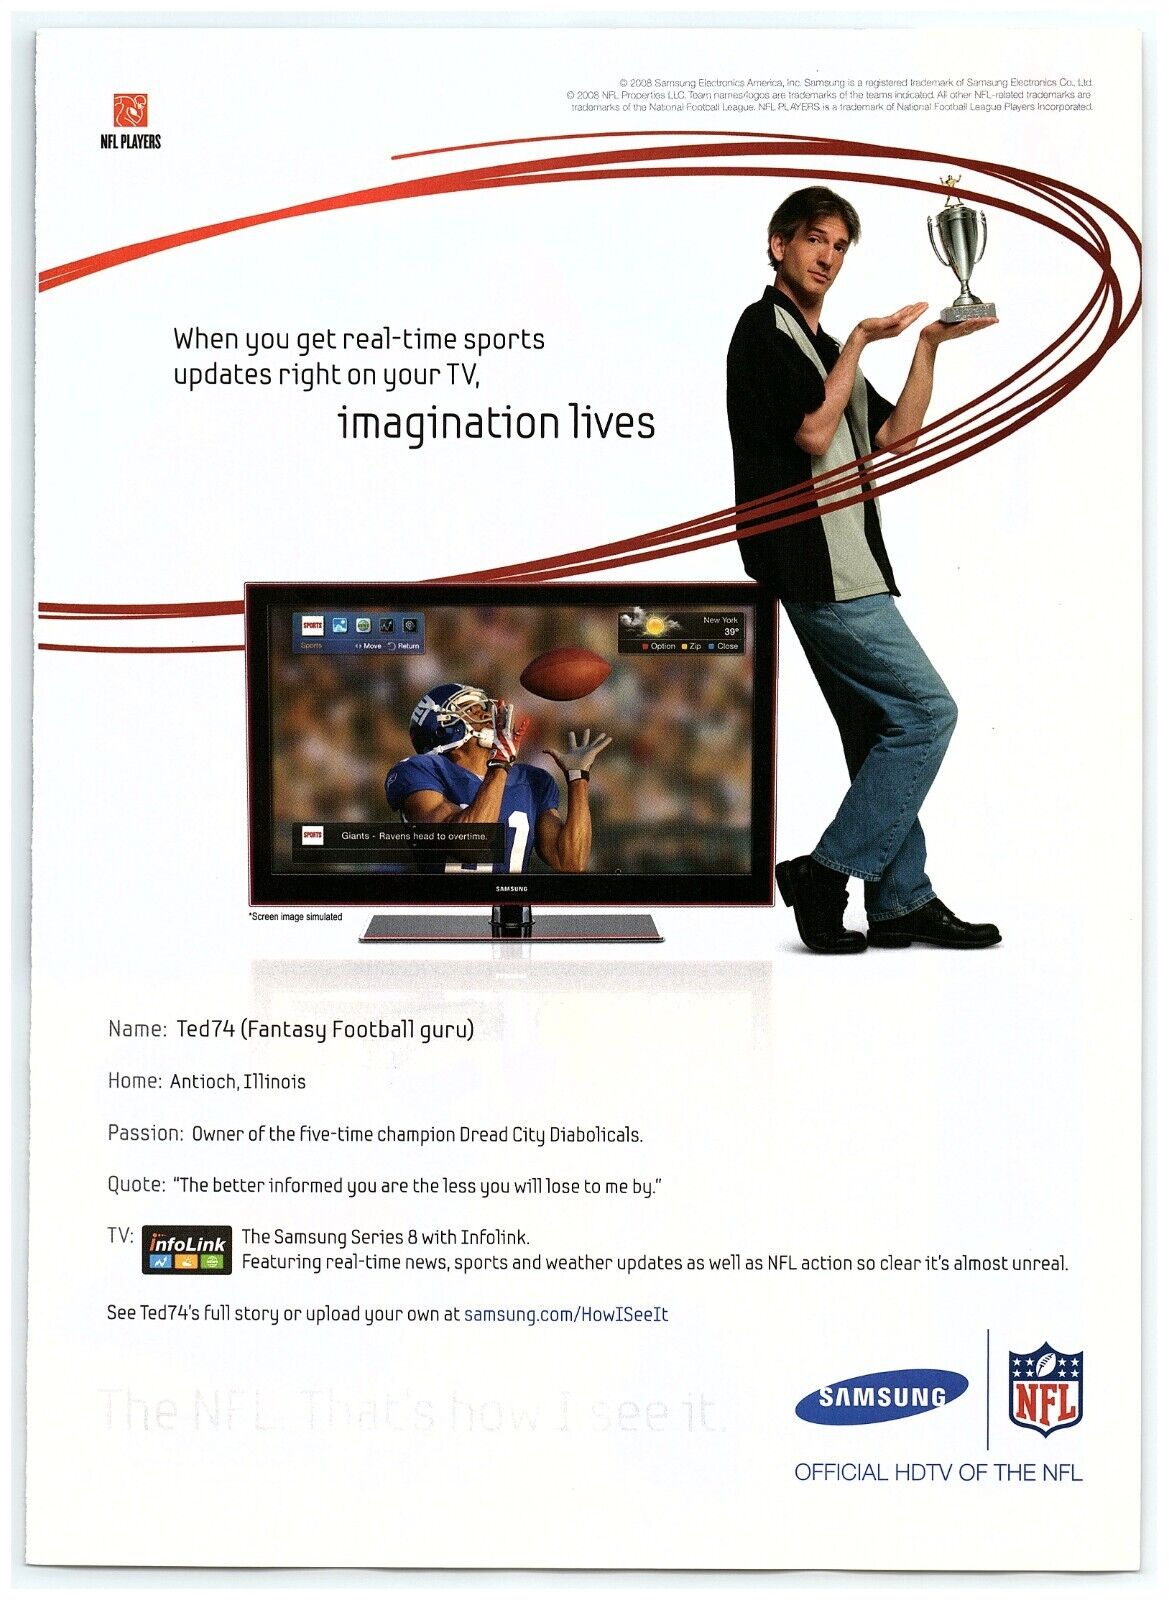 2008 Samsung Series 8 HDTV Print Ad, NFL Fantasy Football Guru Ted74 Antioch IL